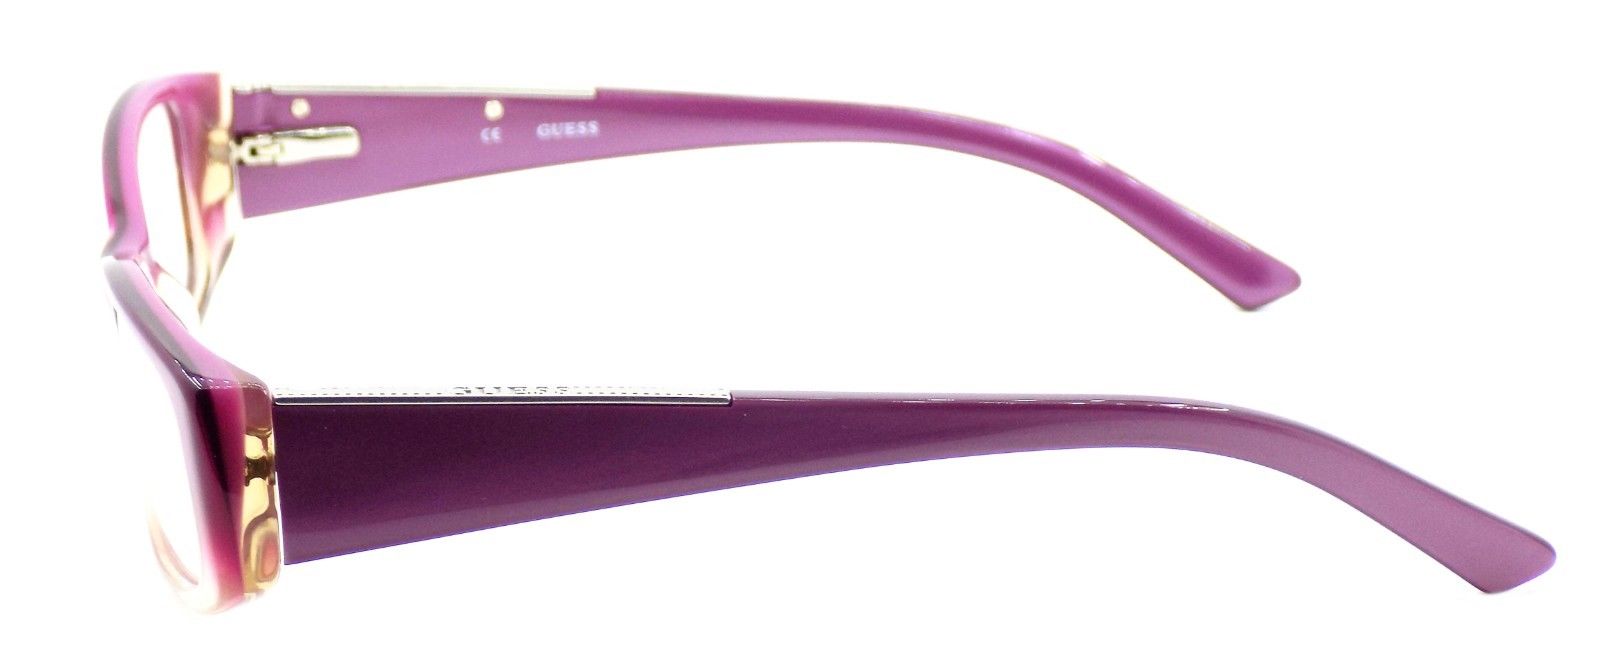 3-GUESS GU2385 PUR Women's Plastic Eyeglasses Frames 52-16-135 Purple + CASE-715583766235-IKSpecs